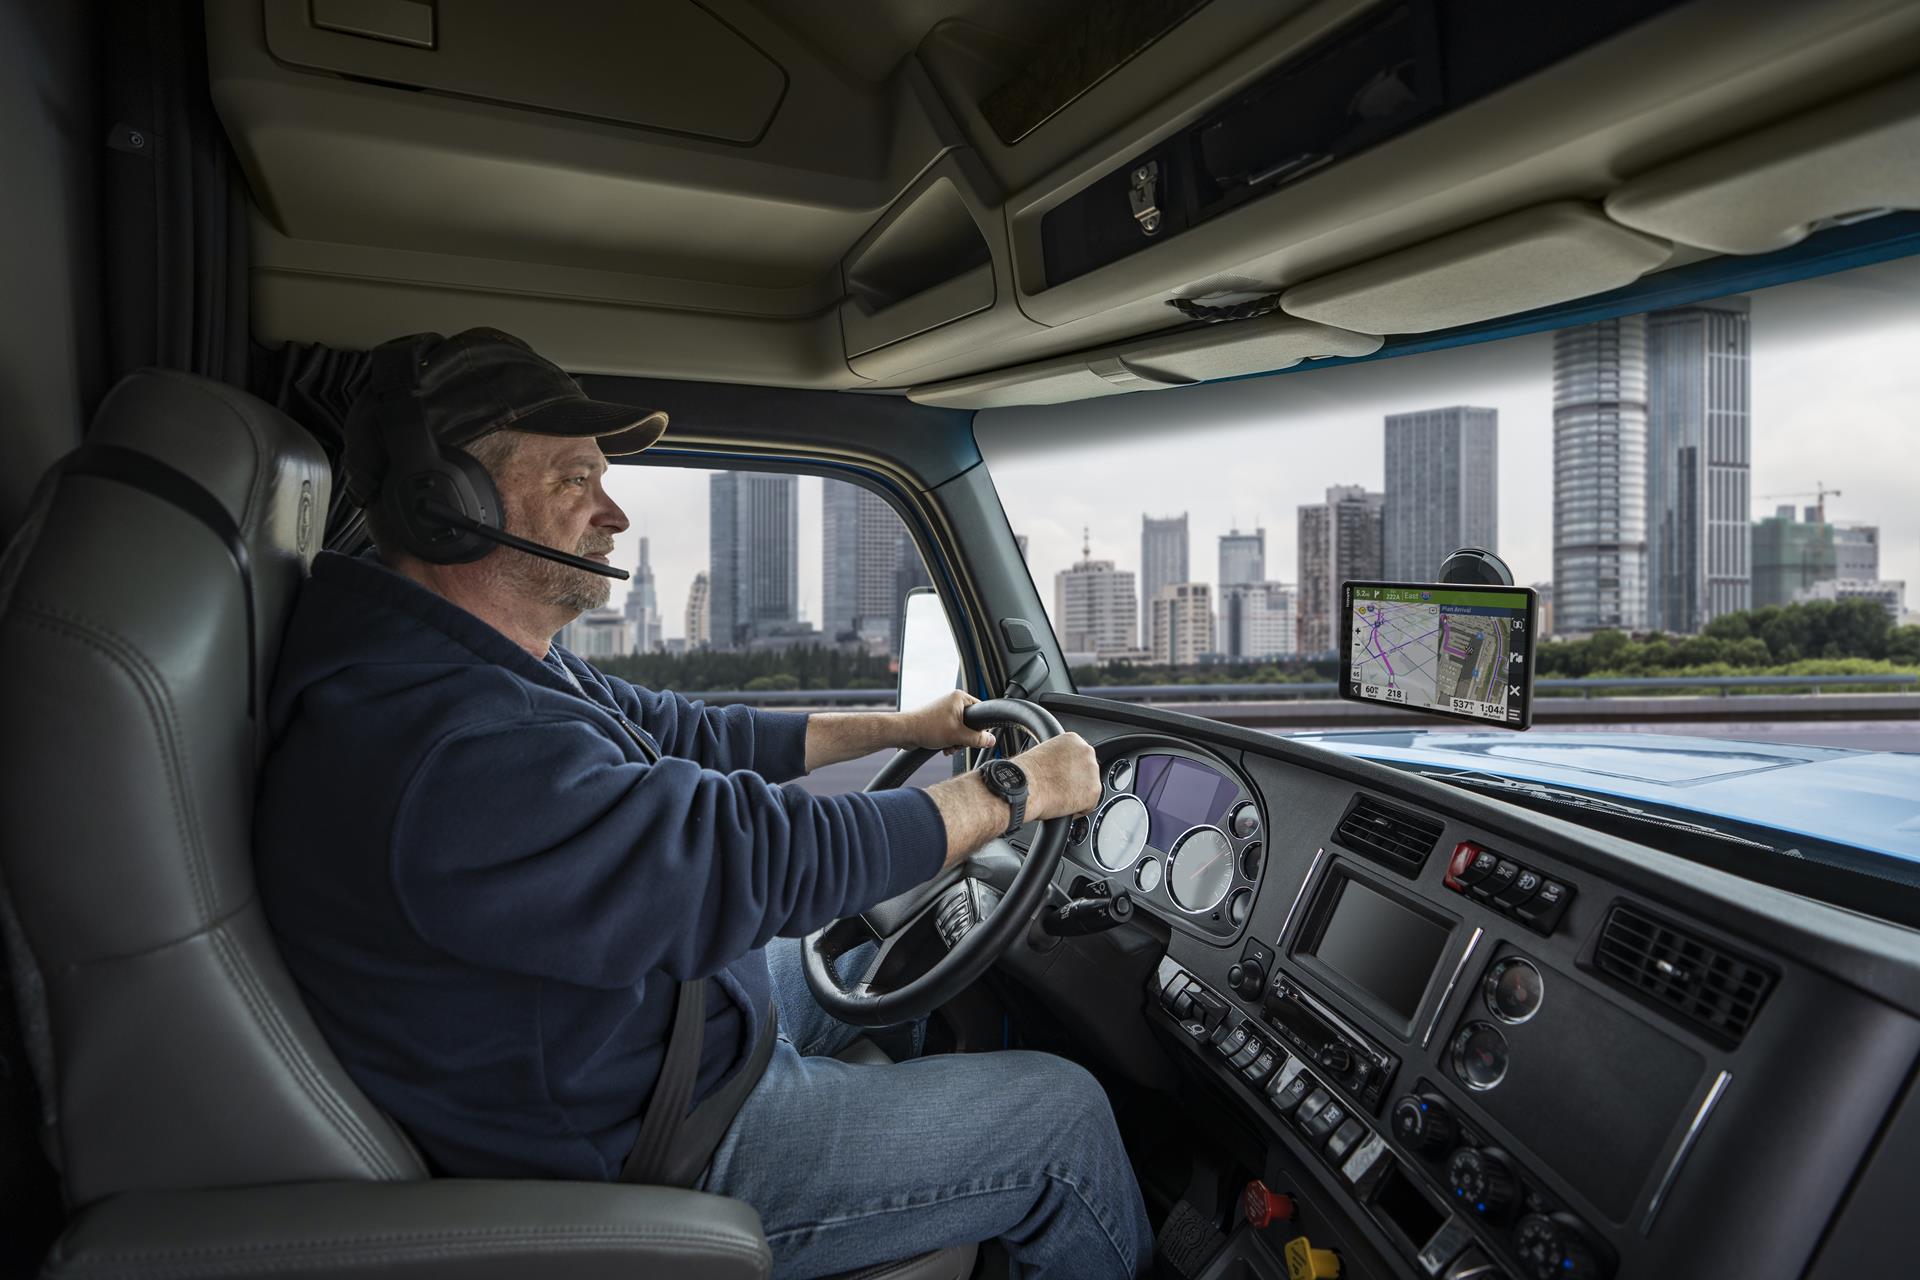 Garmin dēzl 100 Premium Trucking Headset